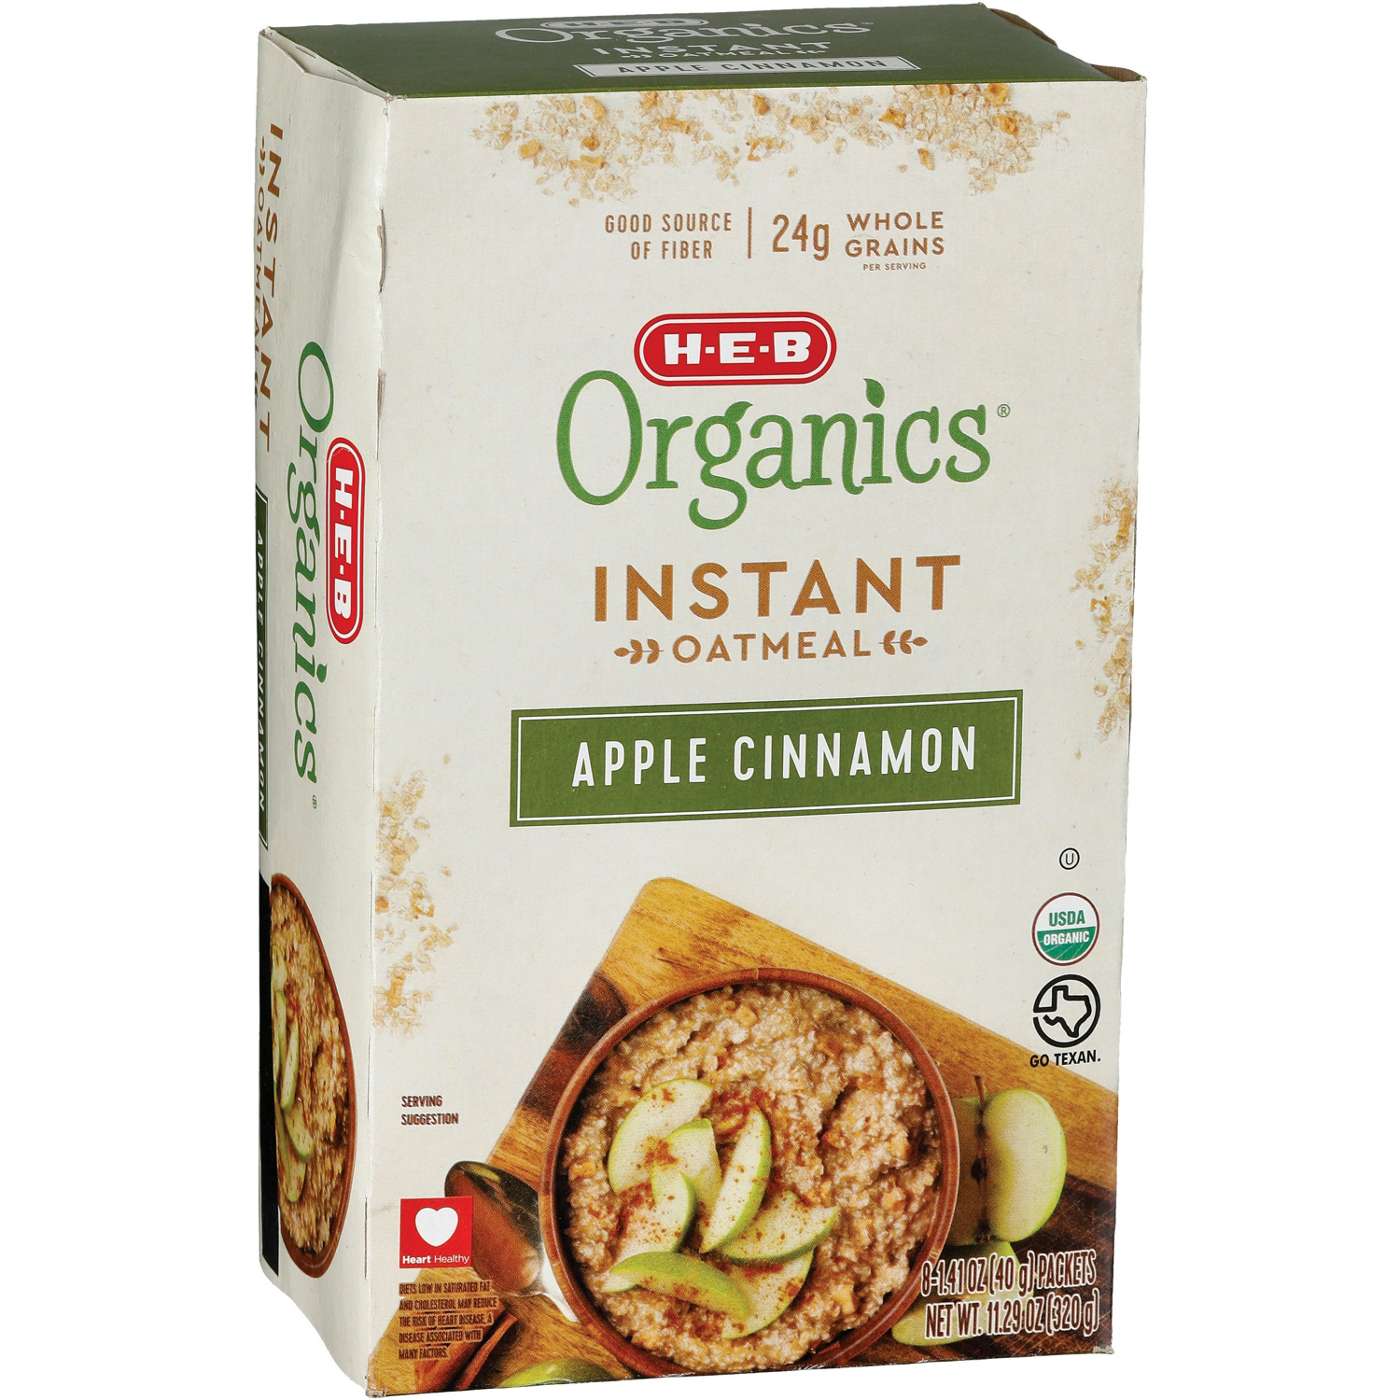 H-E-B Organics Instant Oatmeal - Apple Cinnamon; image 2 of 2